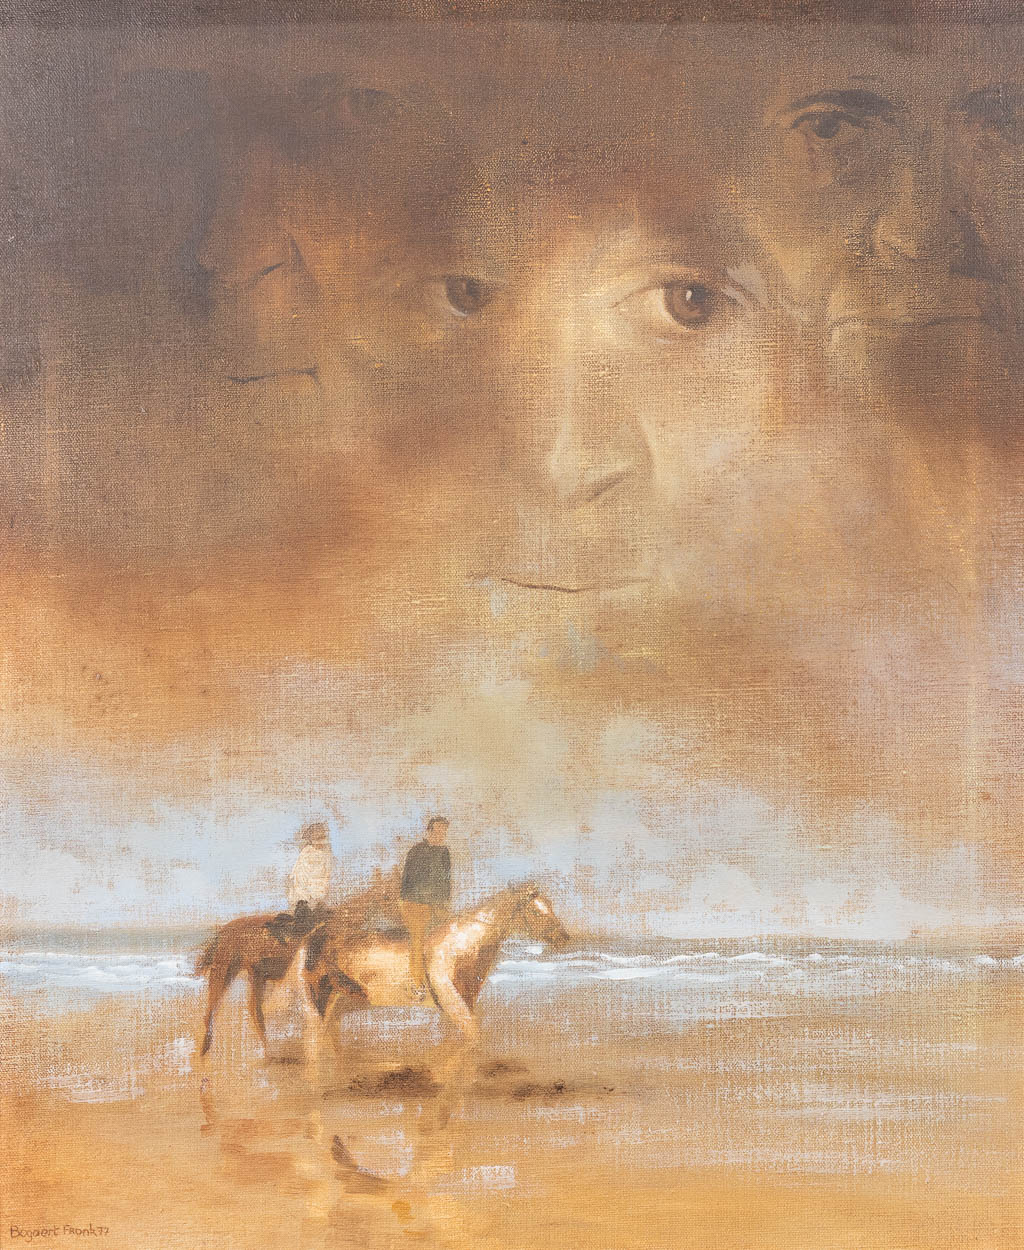 Frank BOGAERT (1950-?) 'Horseback riders' a painting, oil on canvas. 1977. (50 x 60 cm)